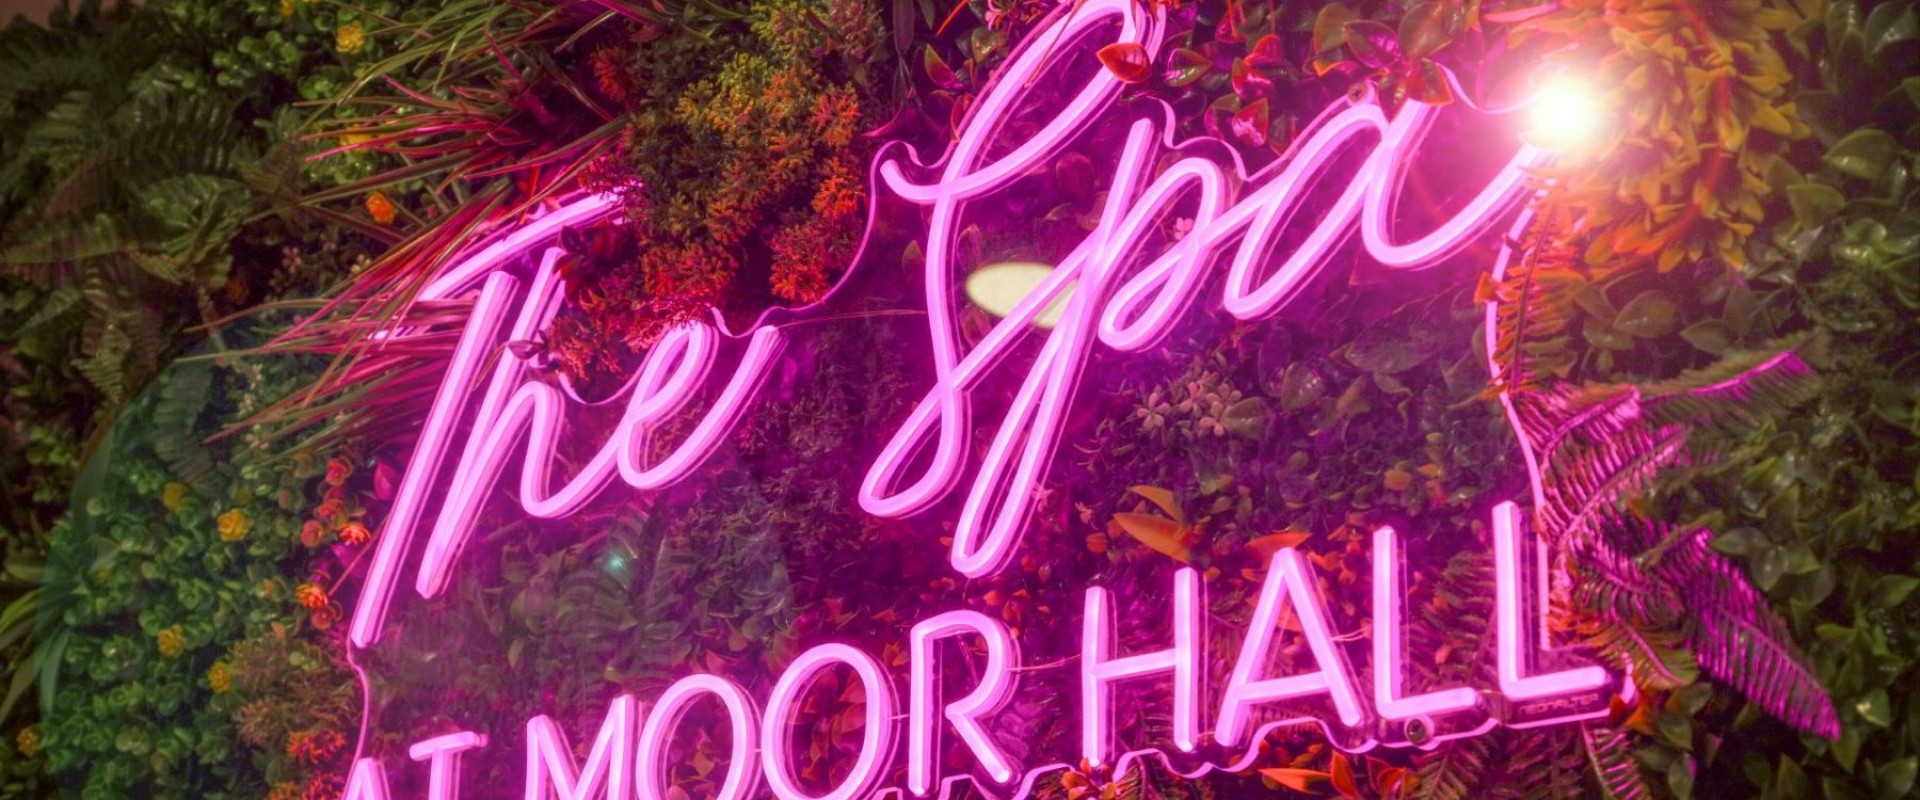 Moor Hall Hotel Spa Neon Sign Slideshow Use